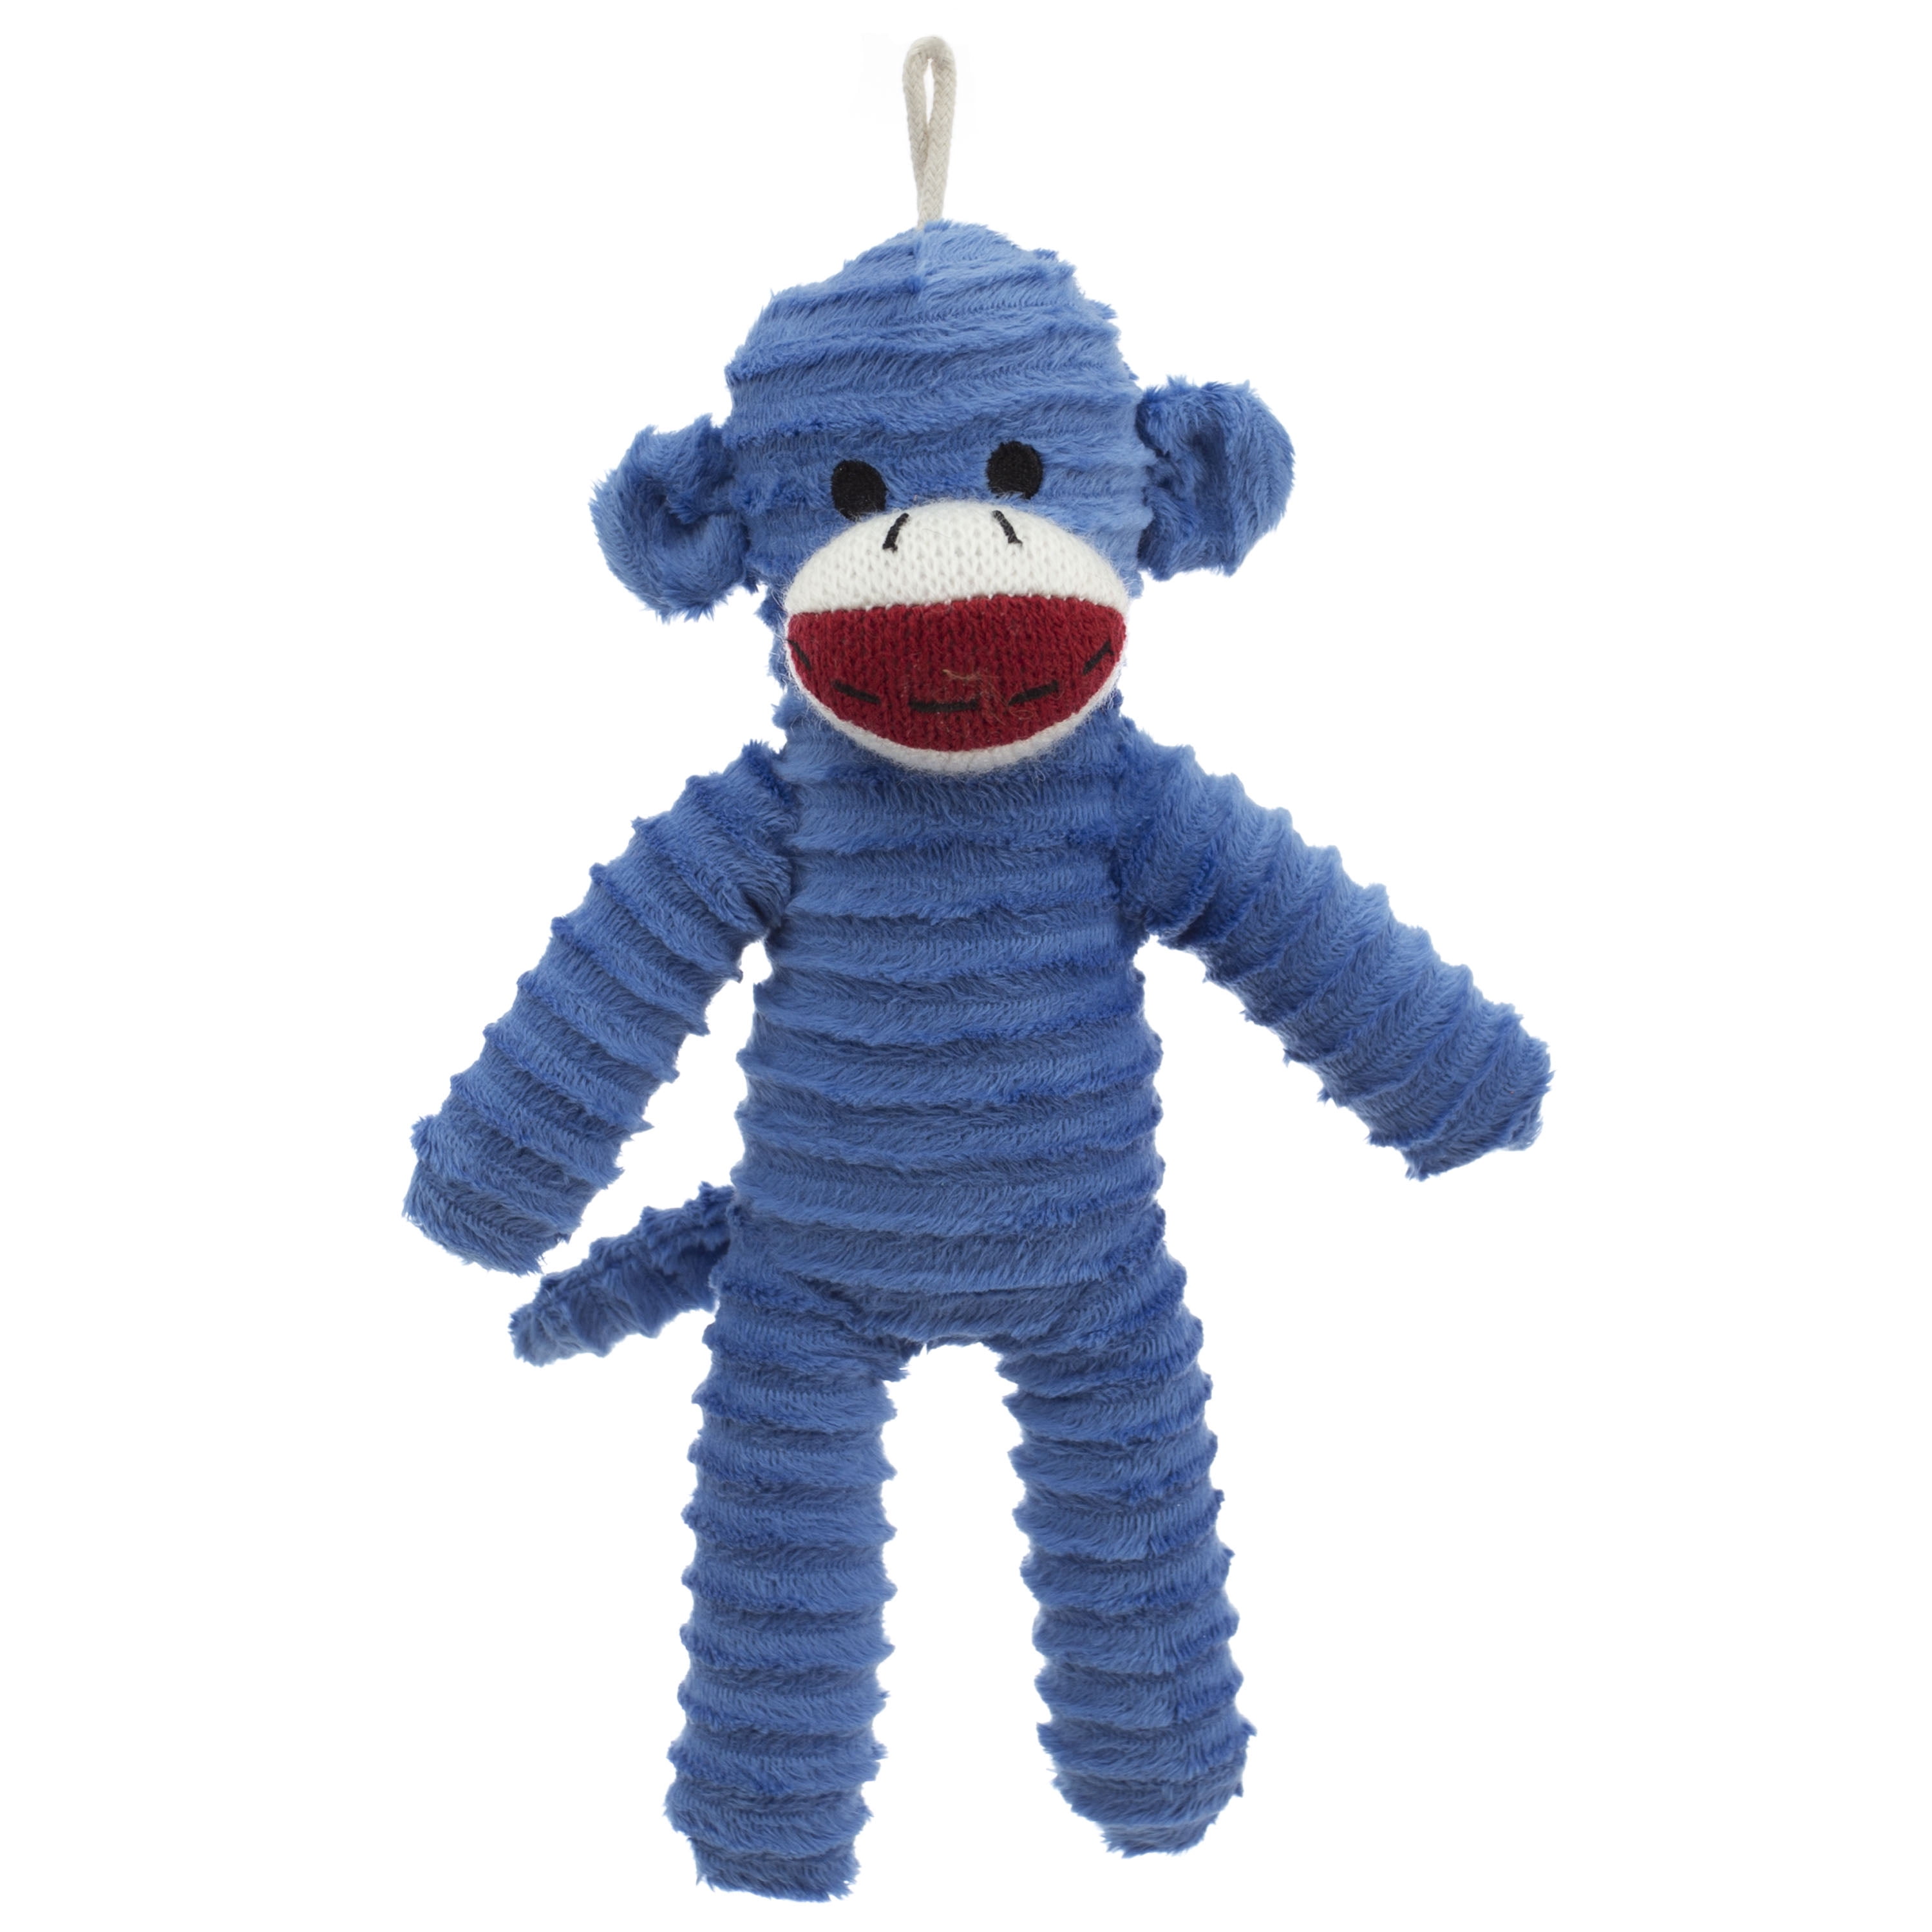 9.75inch Plush Corduroy Squeaky Blue Sock Monkey Pet Toy - Walmart.com